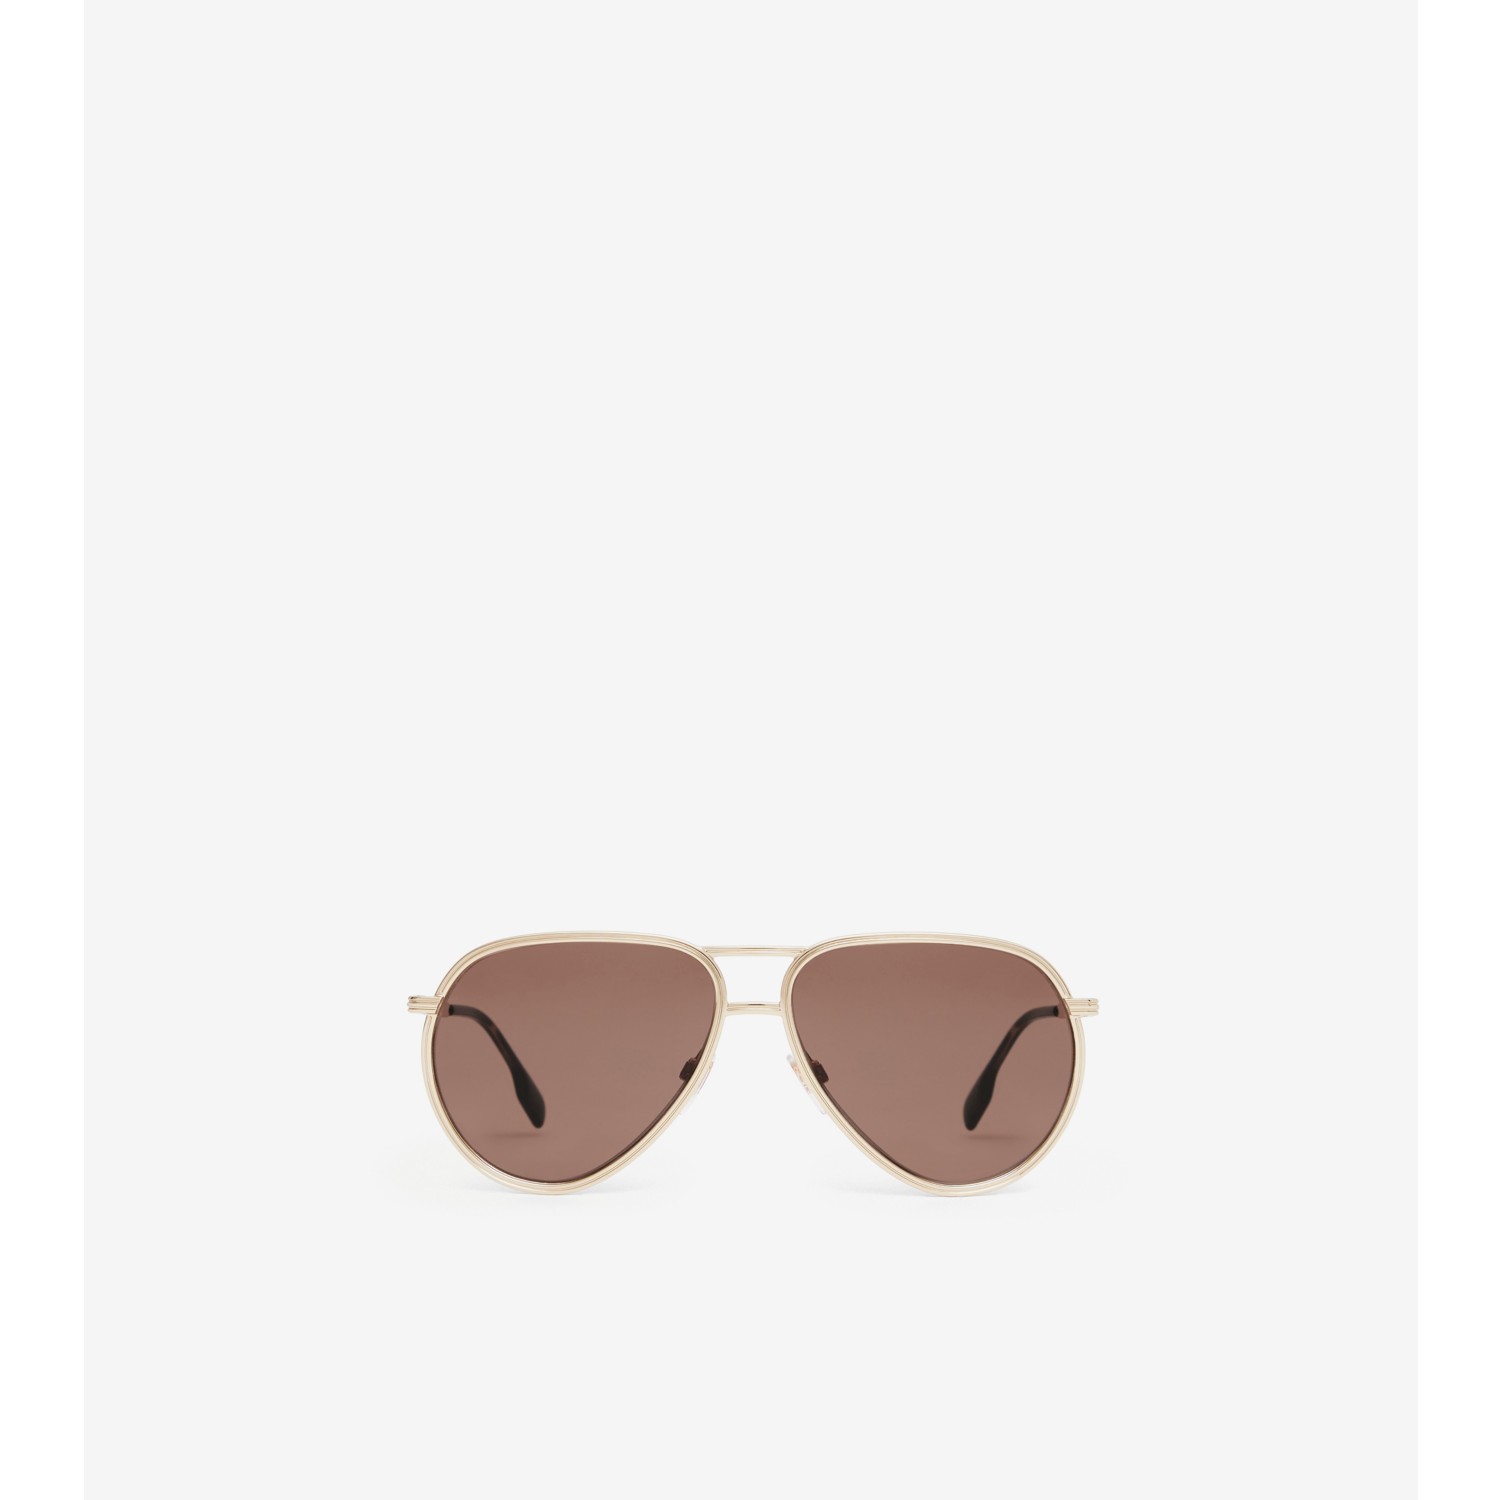 Gafas de sol estilo aviador (Marrón oscuro) - Hombre